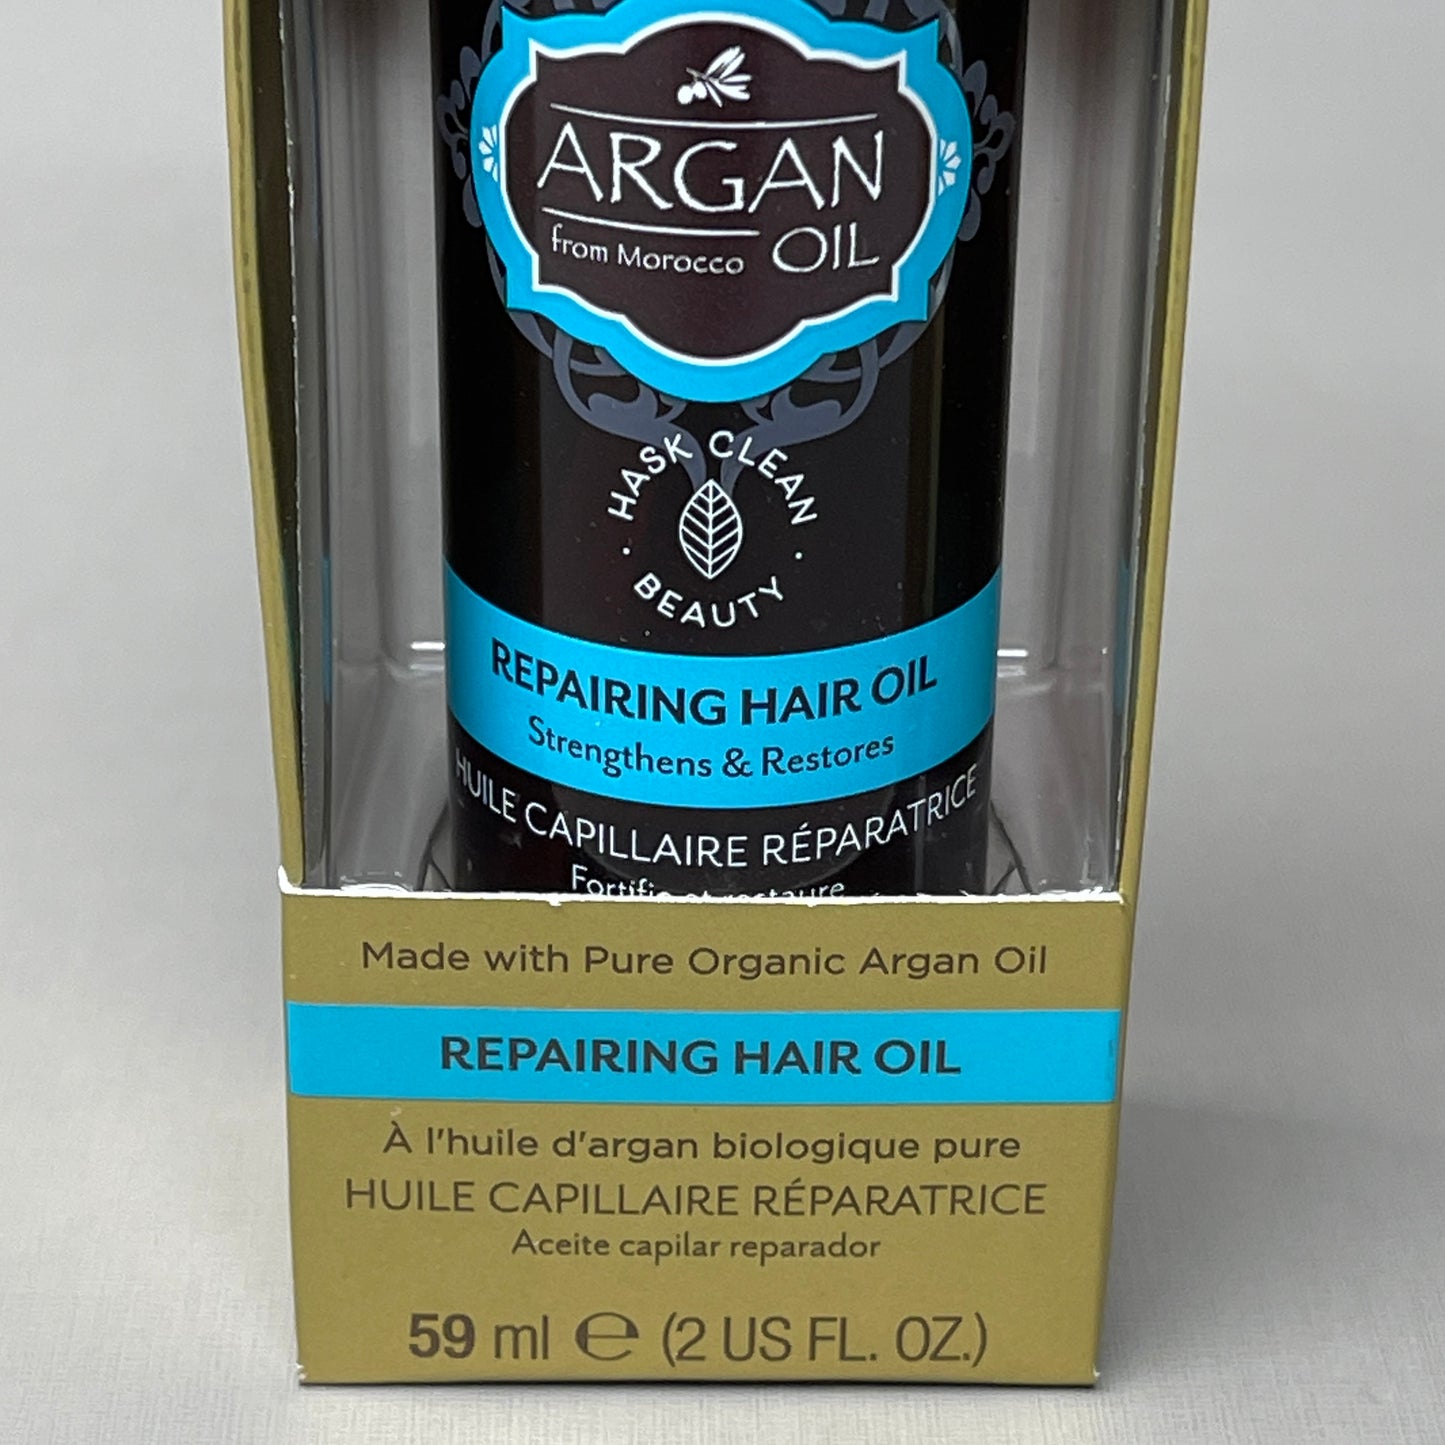 HASK Argan Shine Oil from Morocco Repairing Hair Oil 2 oz 31316D (New)